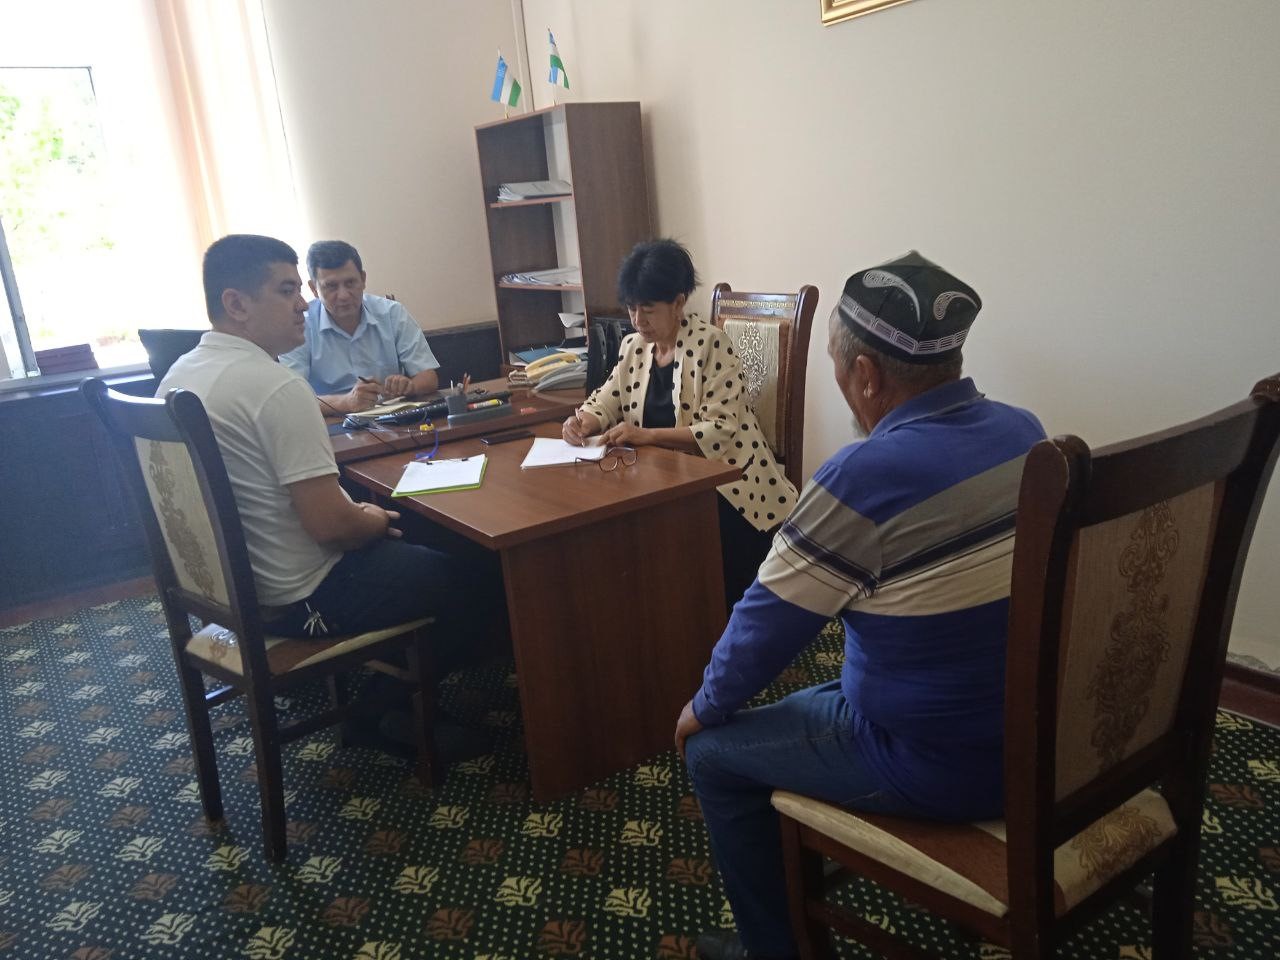 Another reception of citizens organized in Syrdarya region